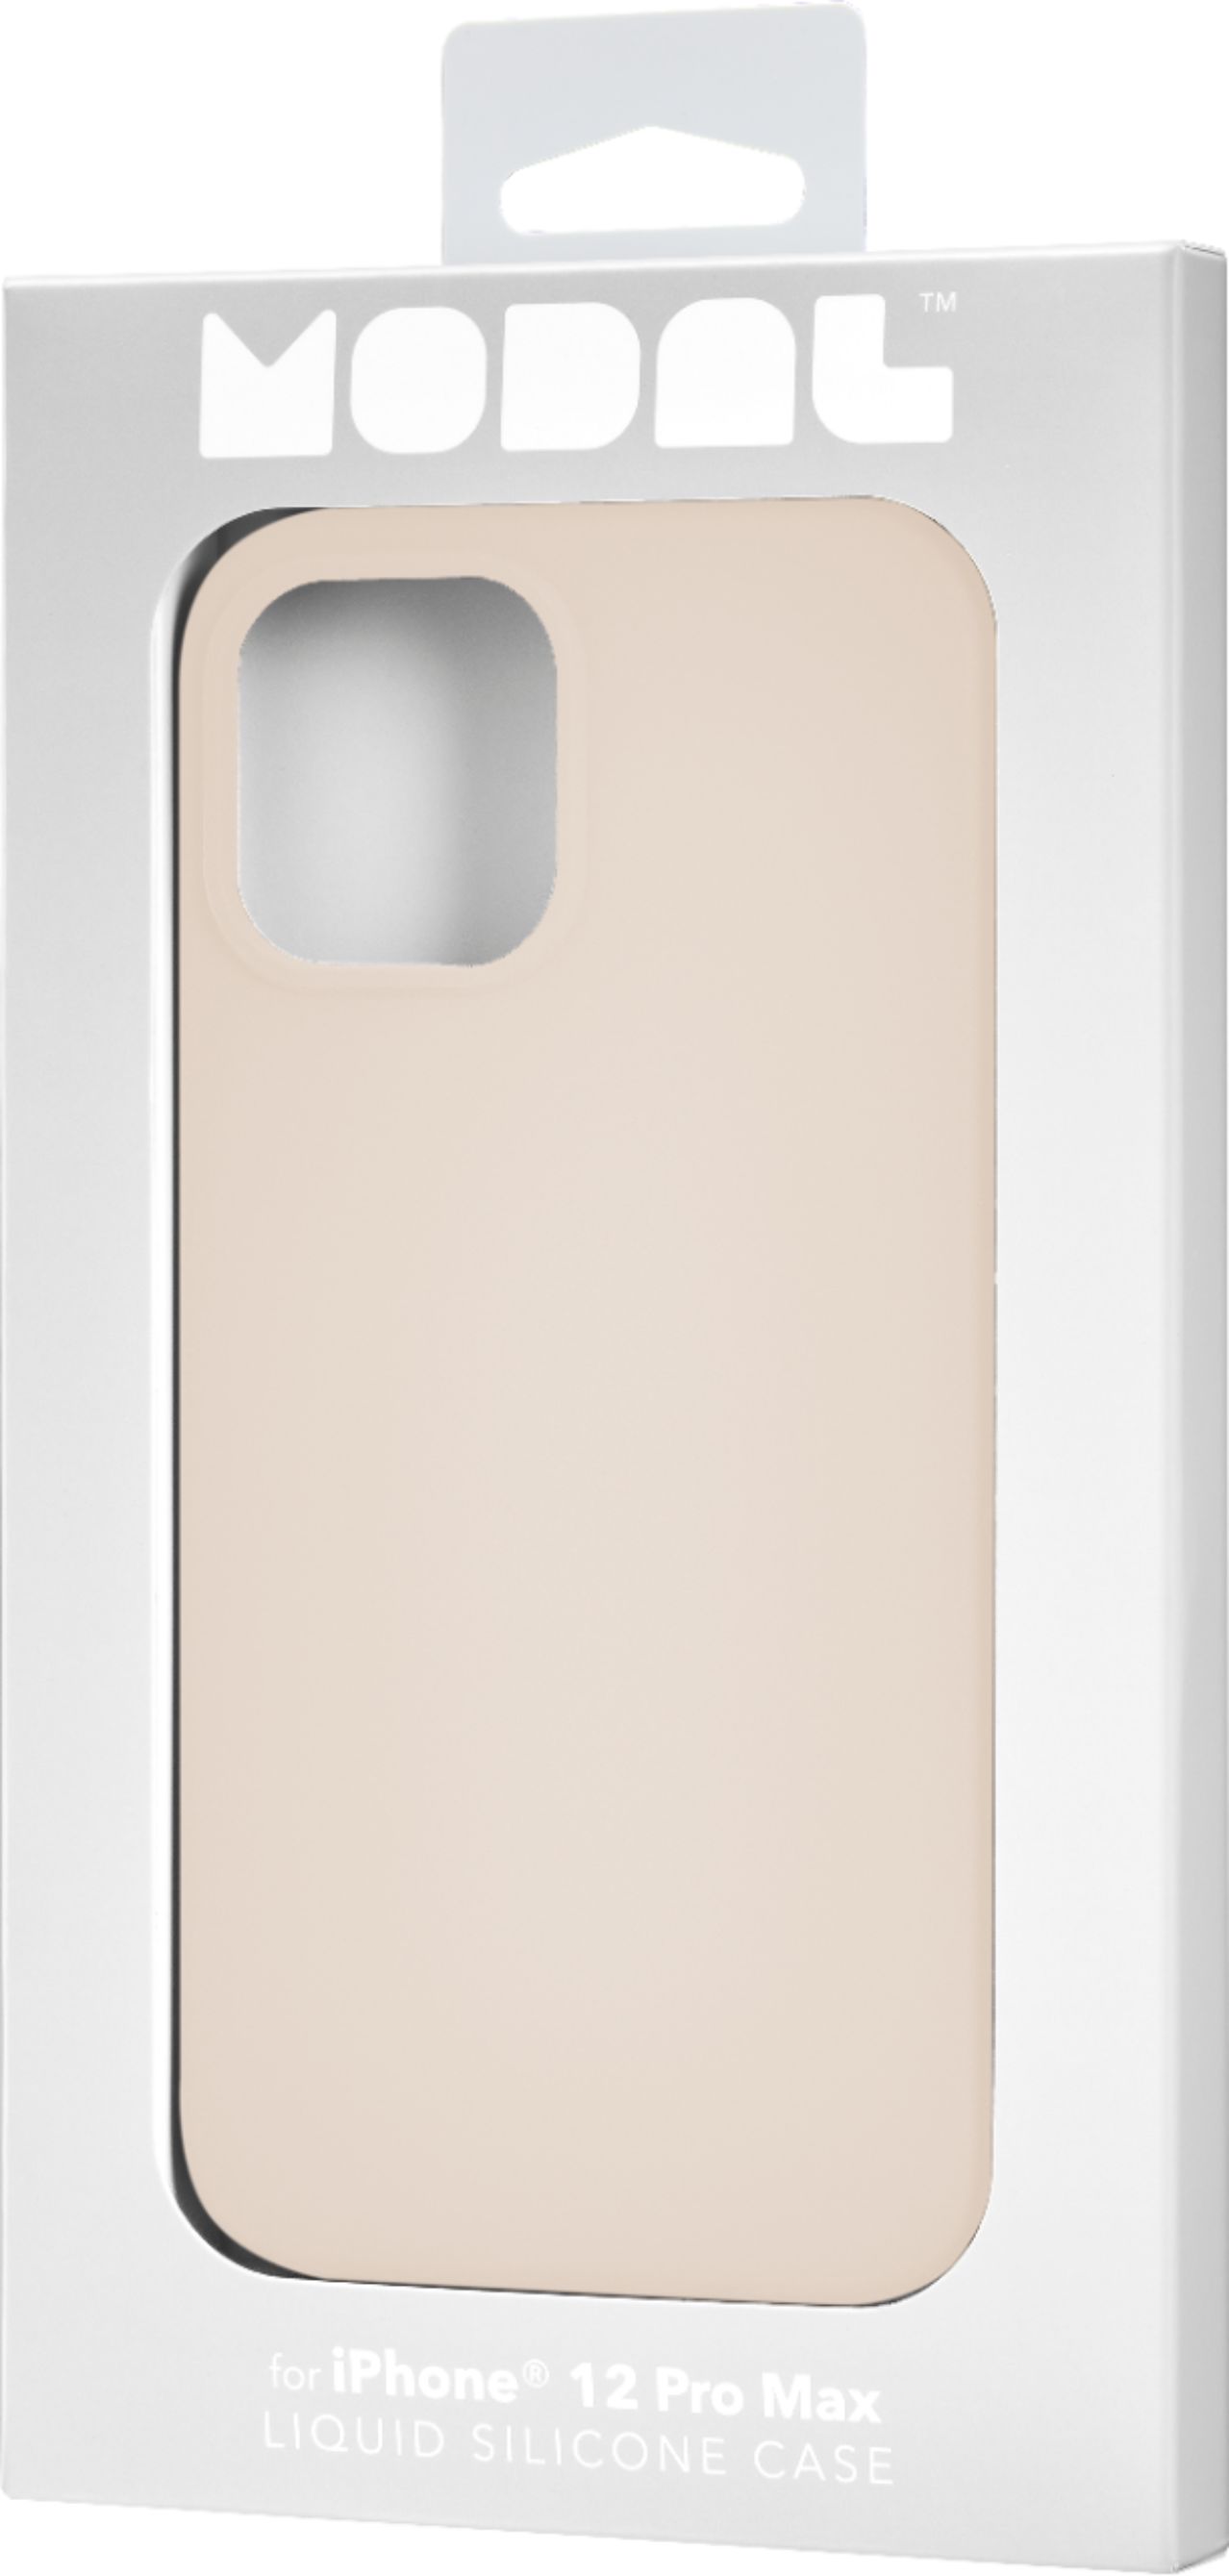 Pack x12 Carcasa silicona case iPhone 12 pro Max, LifeMax*